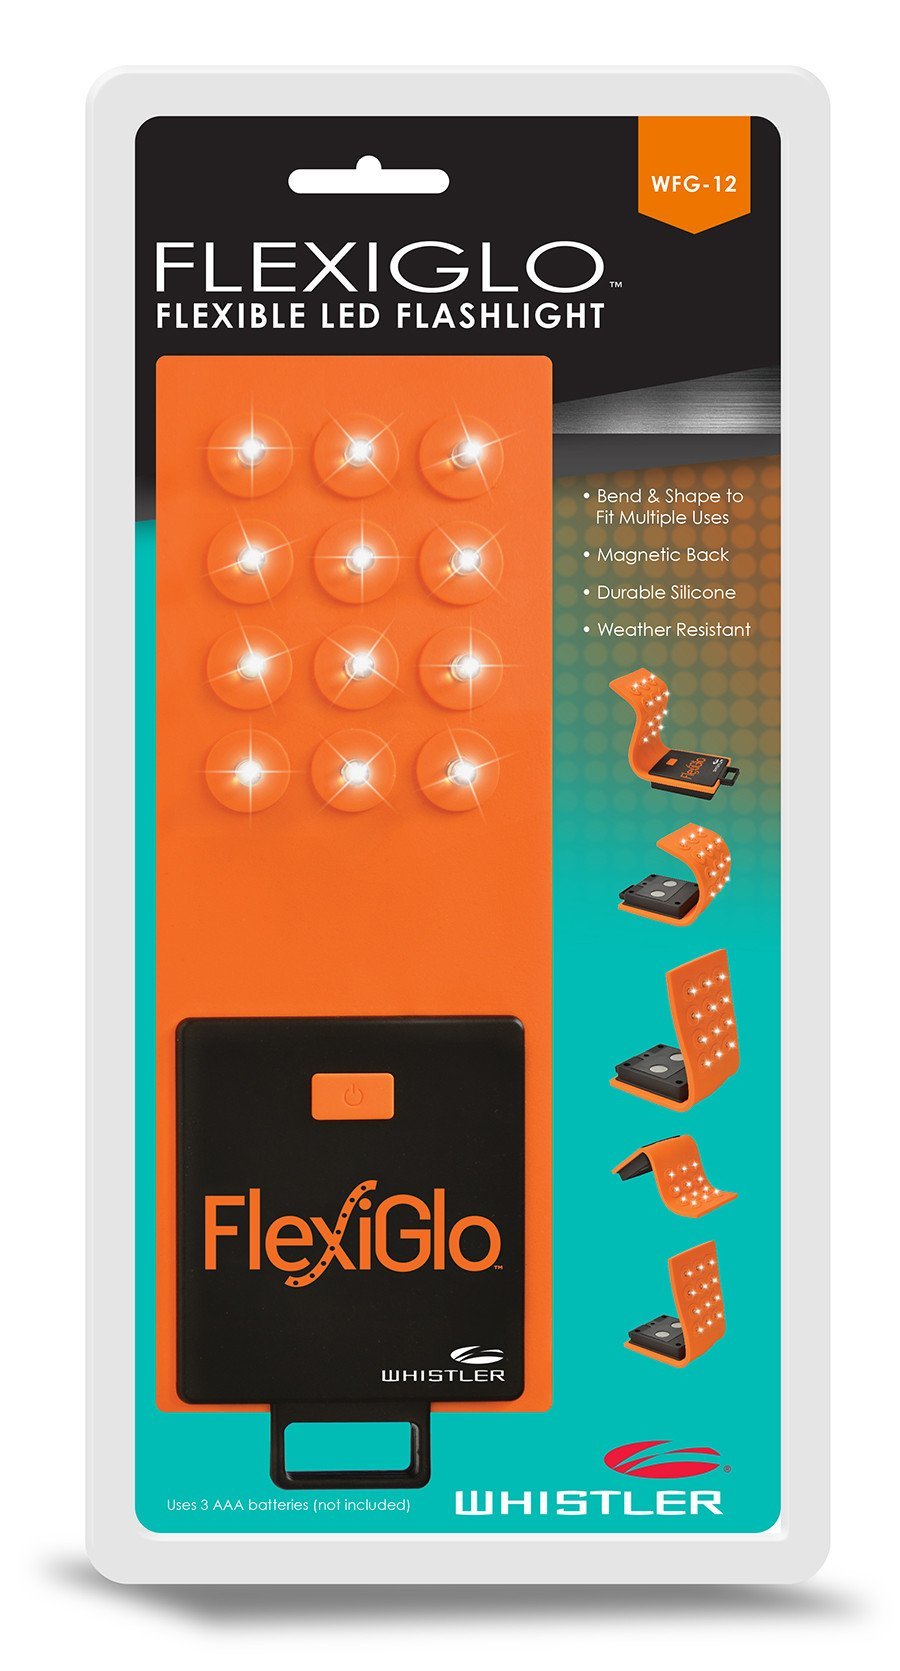 FlexiGlo 12 - Whistler Group